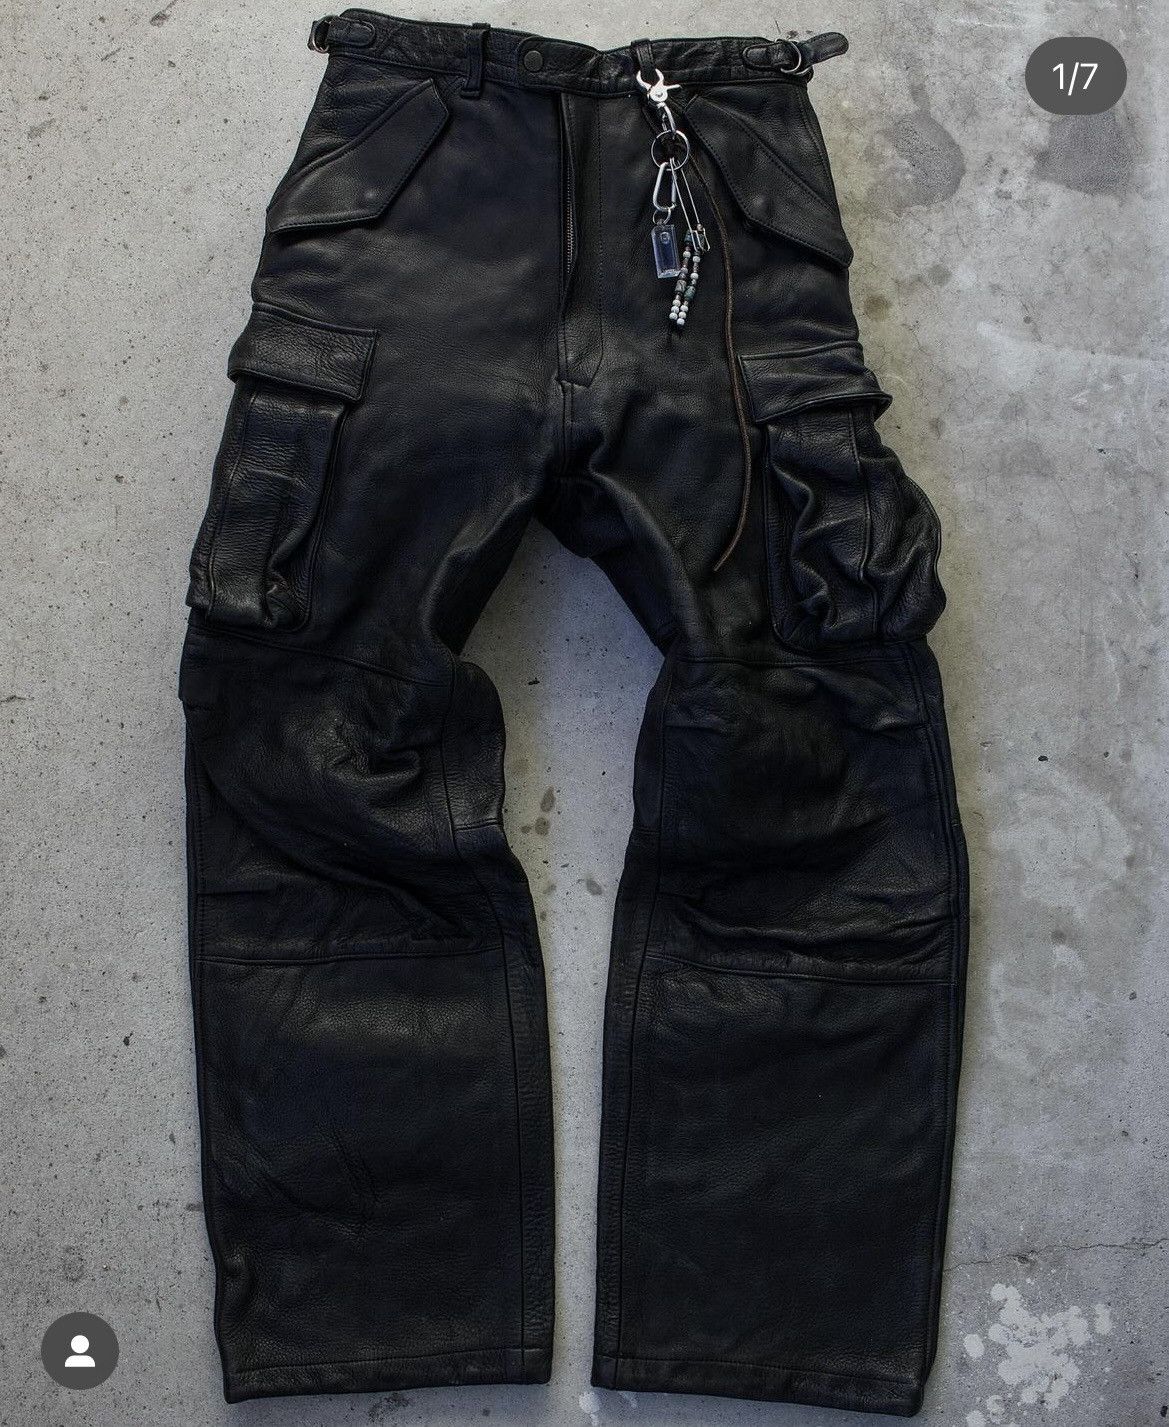 Julius Black Rider Leather Pants